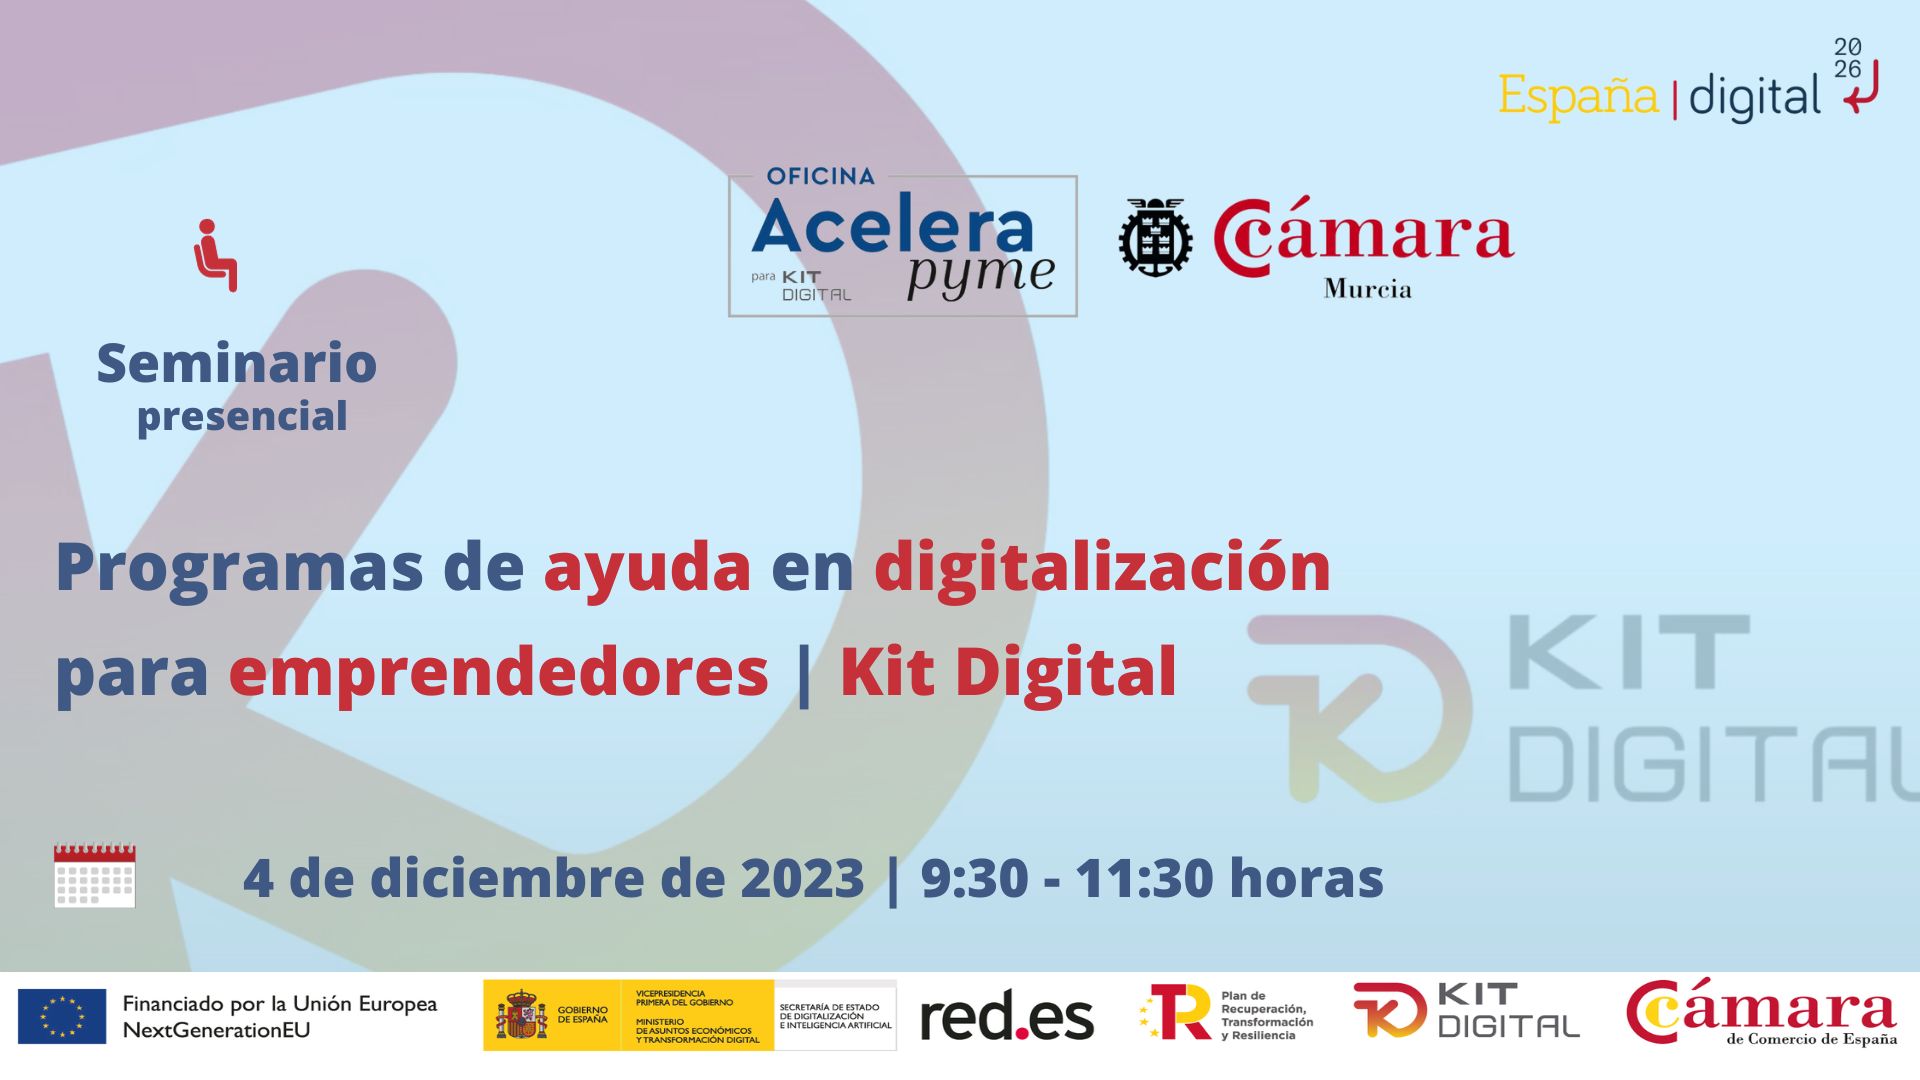 Oficina Acelera Pyme | Seminario | Programas de ayudas en digitalización para emprendedores Kit Digital